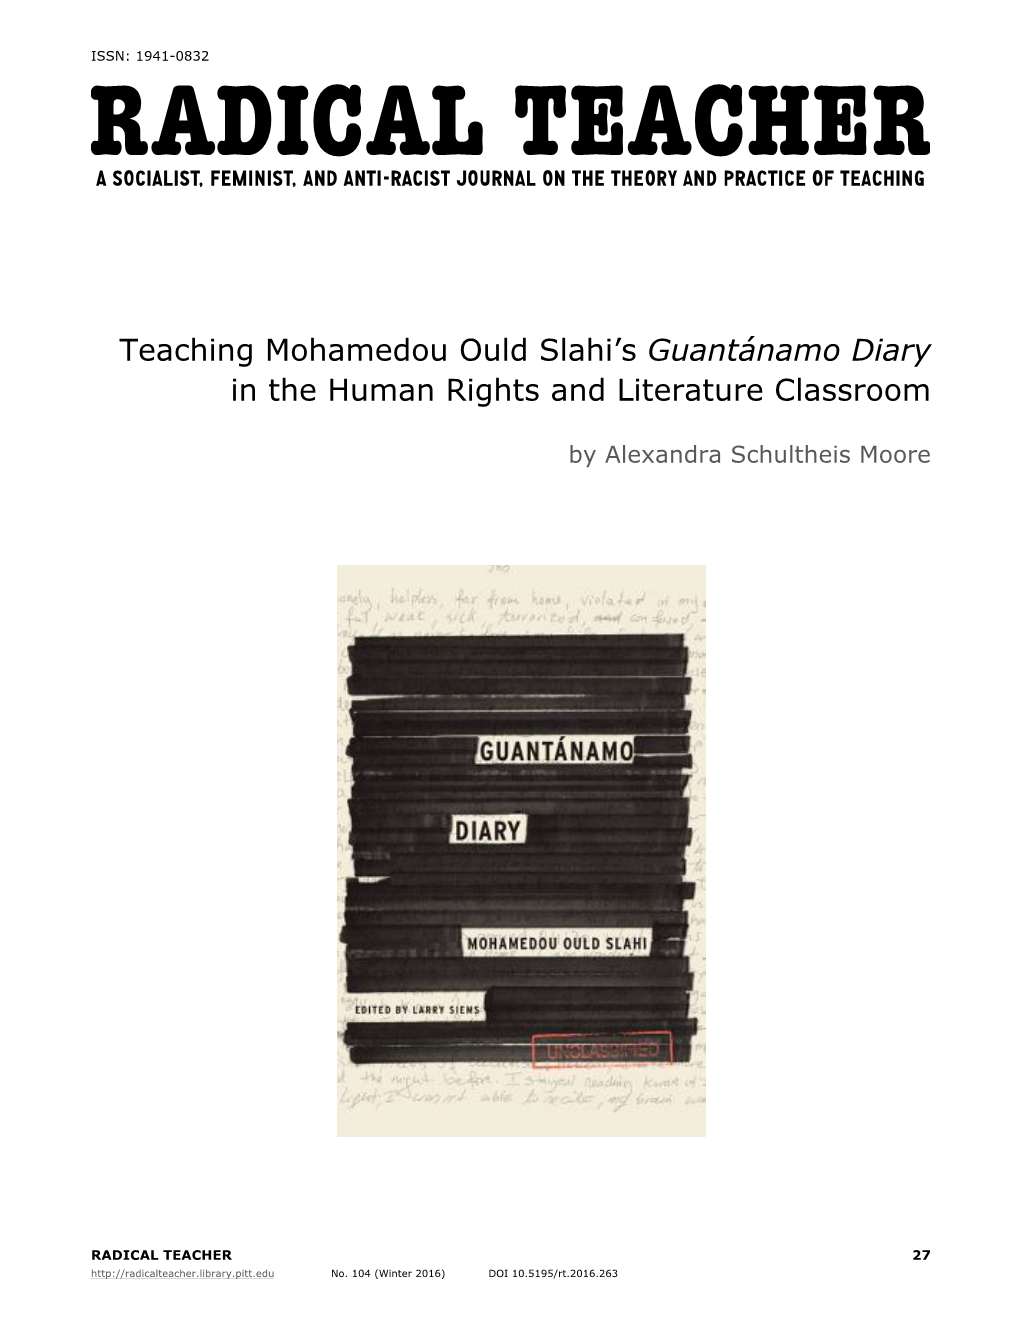 Teaching Mohamedou Ould Slahi's Guantánamo Diary in the Human